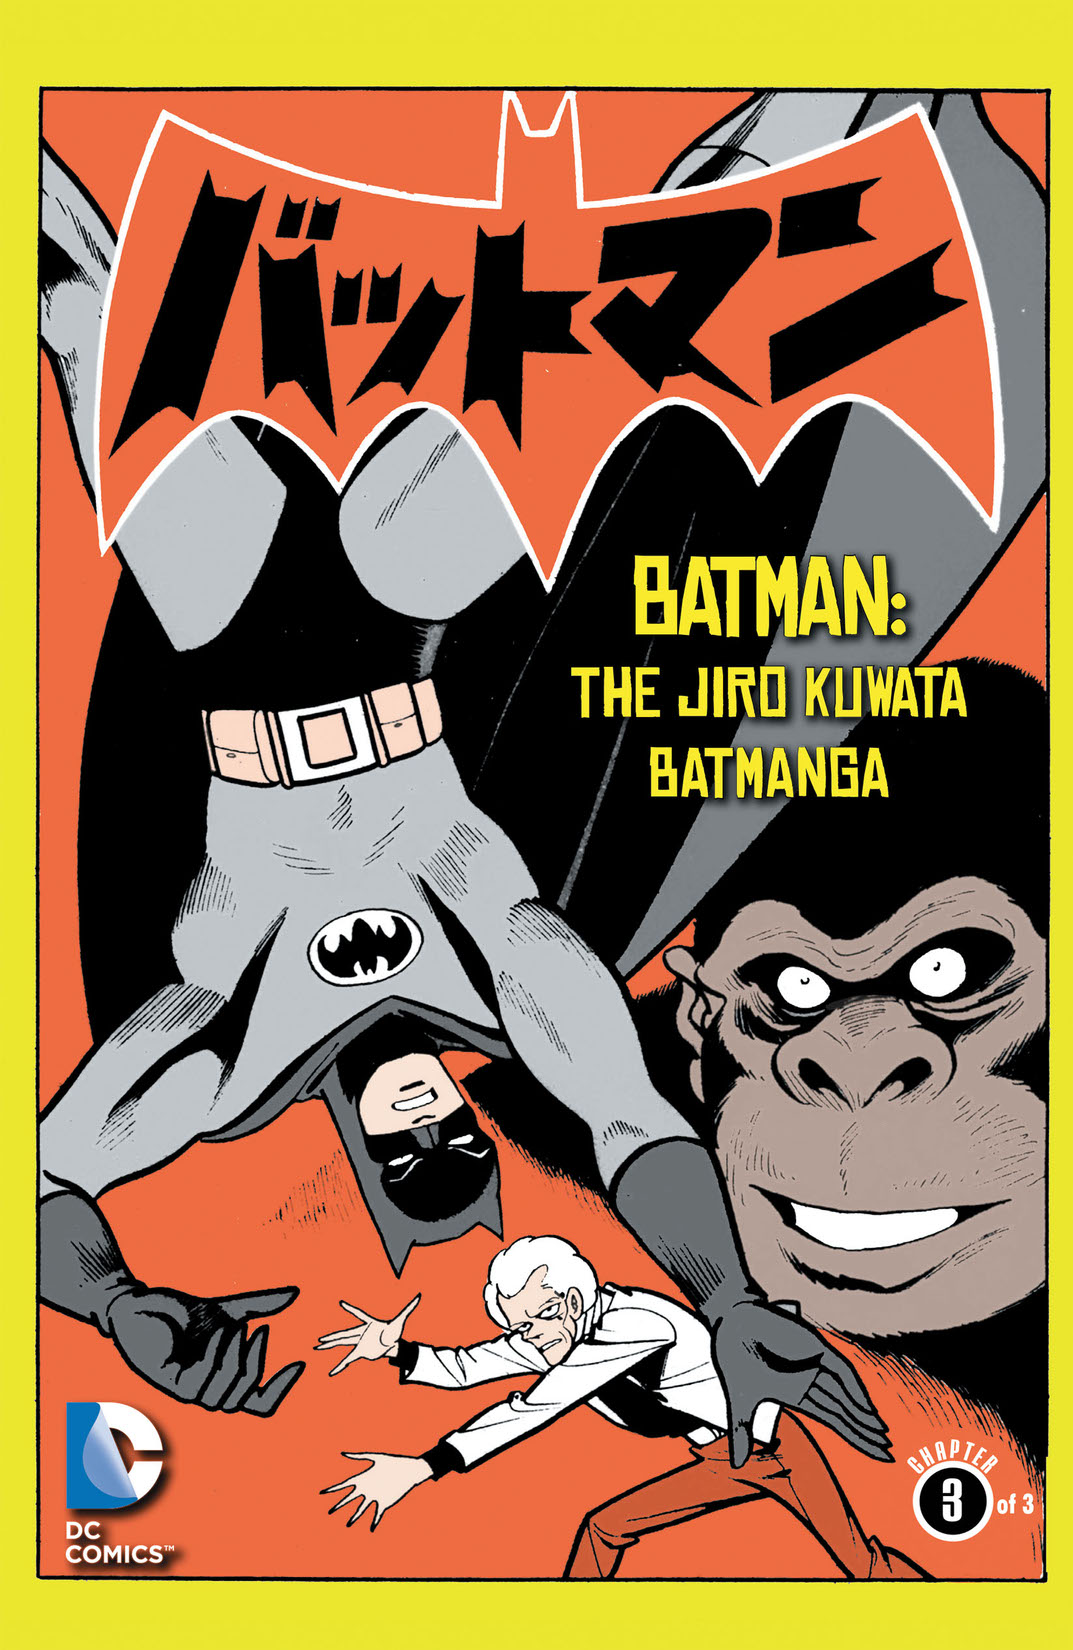 Batman: The Jiro Kuwata Batmanga #12 preview images